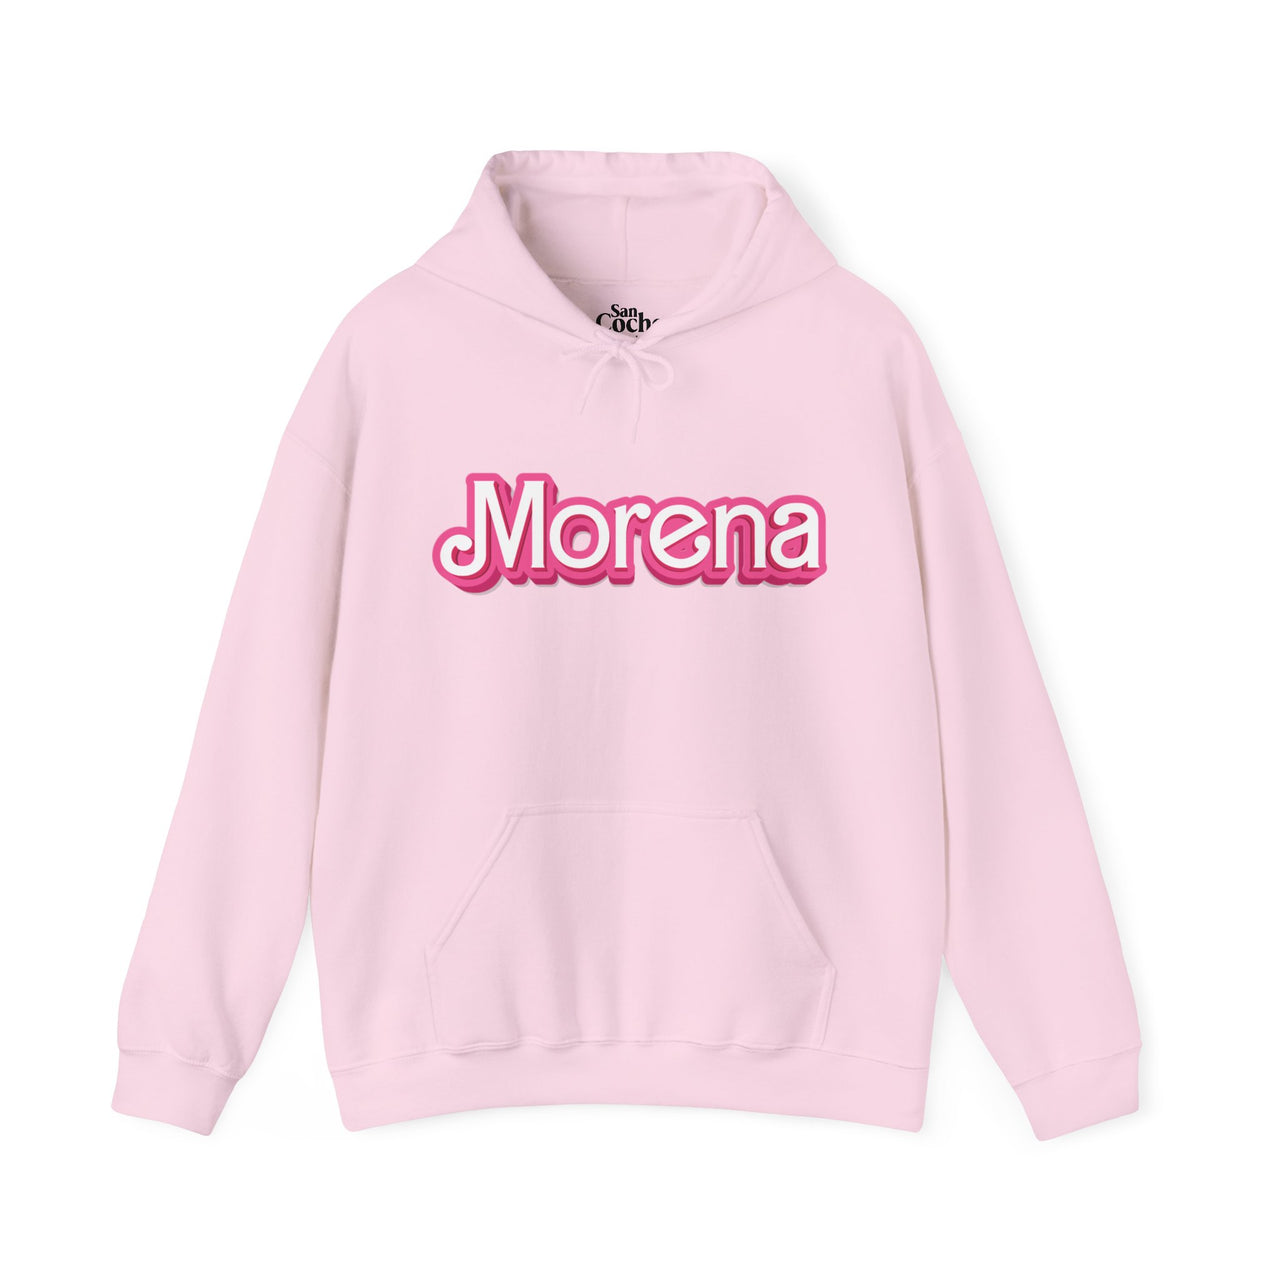 Morena Barbie Style Oversized Hoodie | Morenita Beauty and Pride